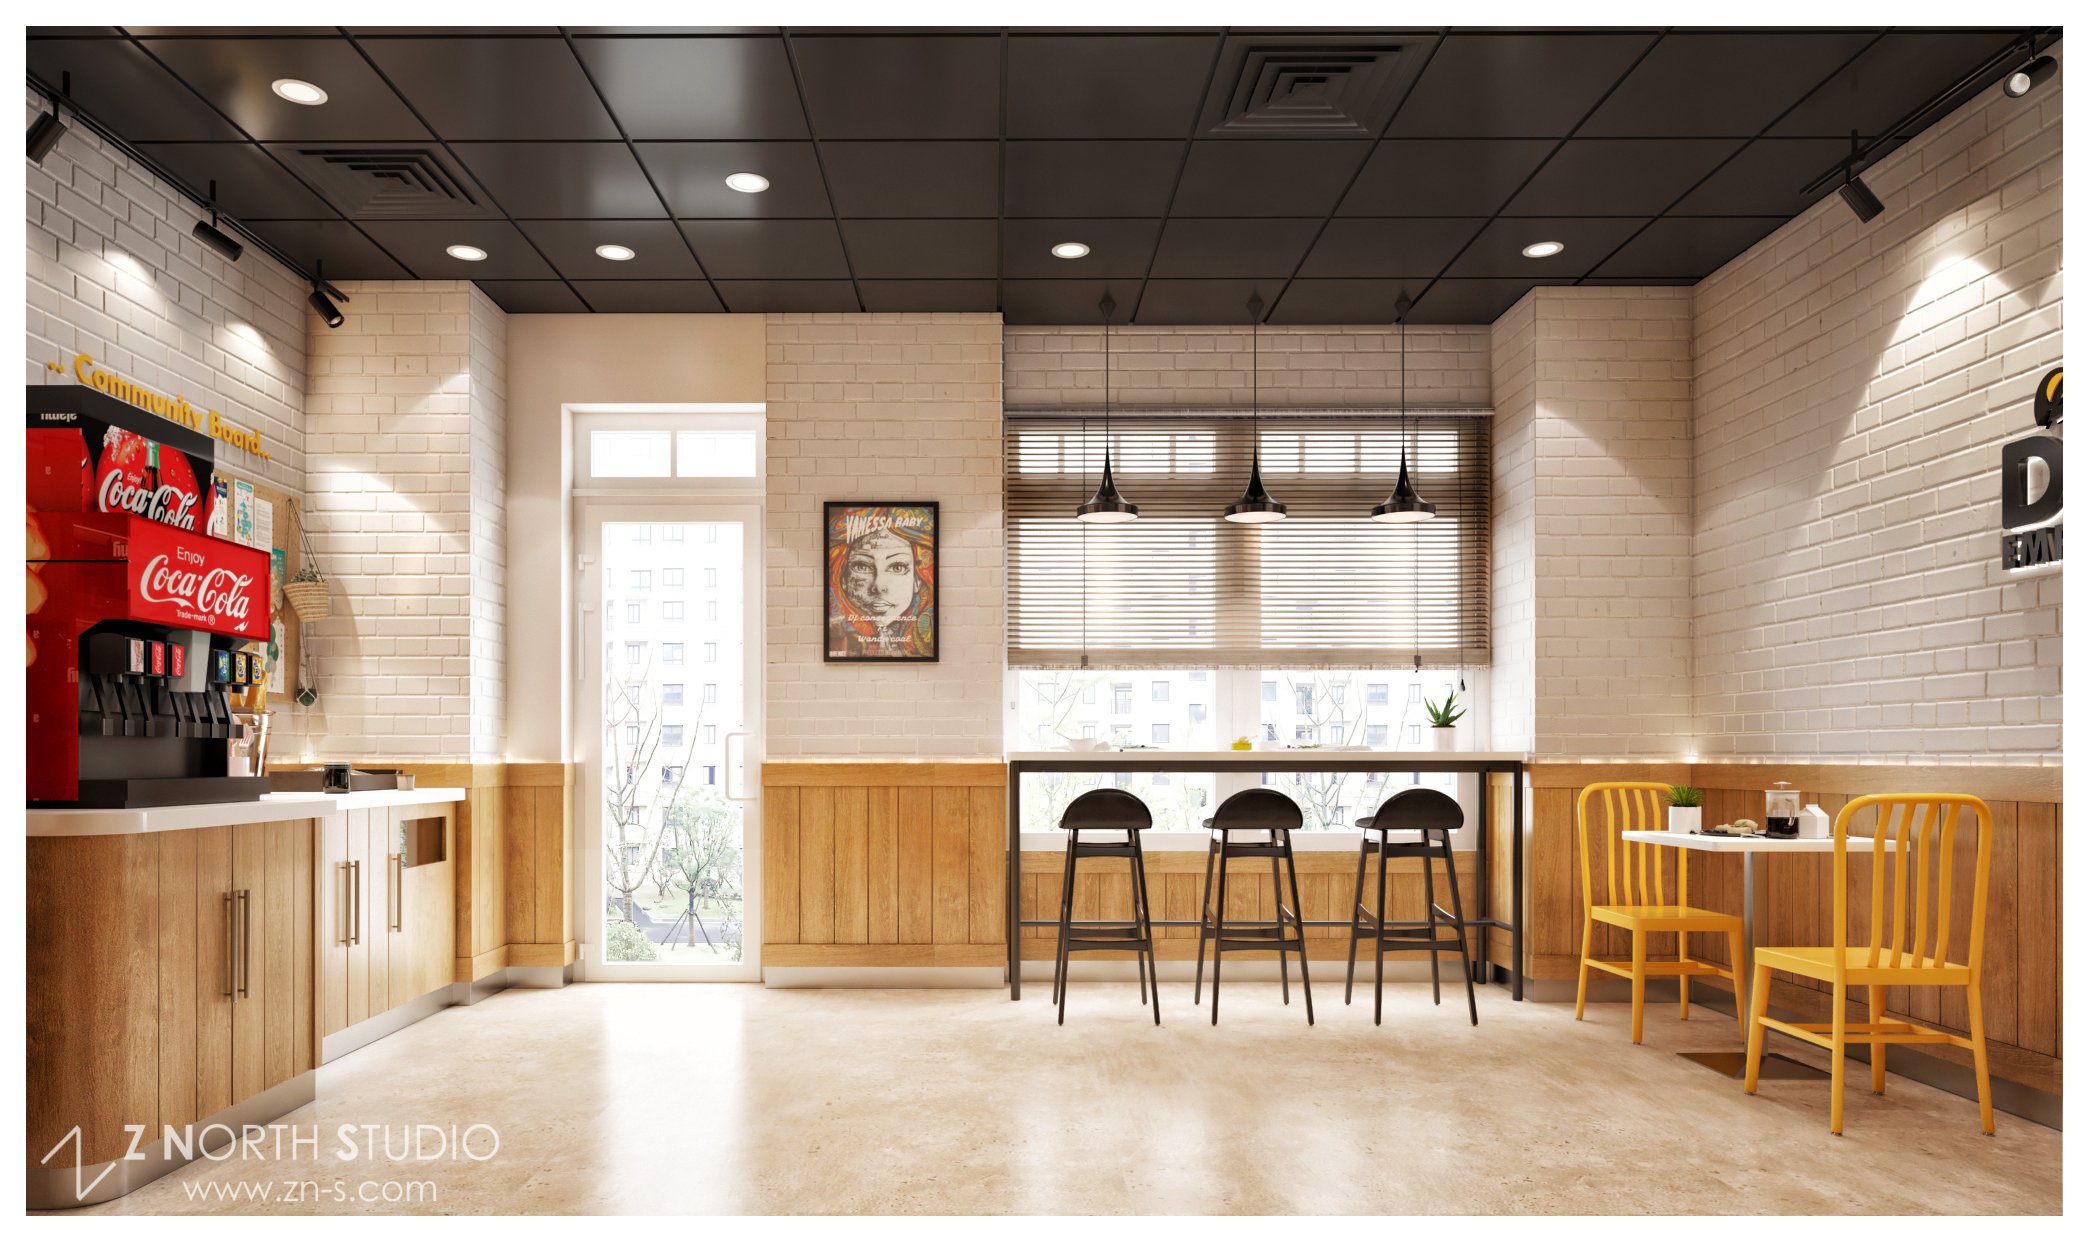 DMV Empanadas - Restaurant Interior Design - Z North Studio (4).jpg